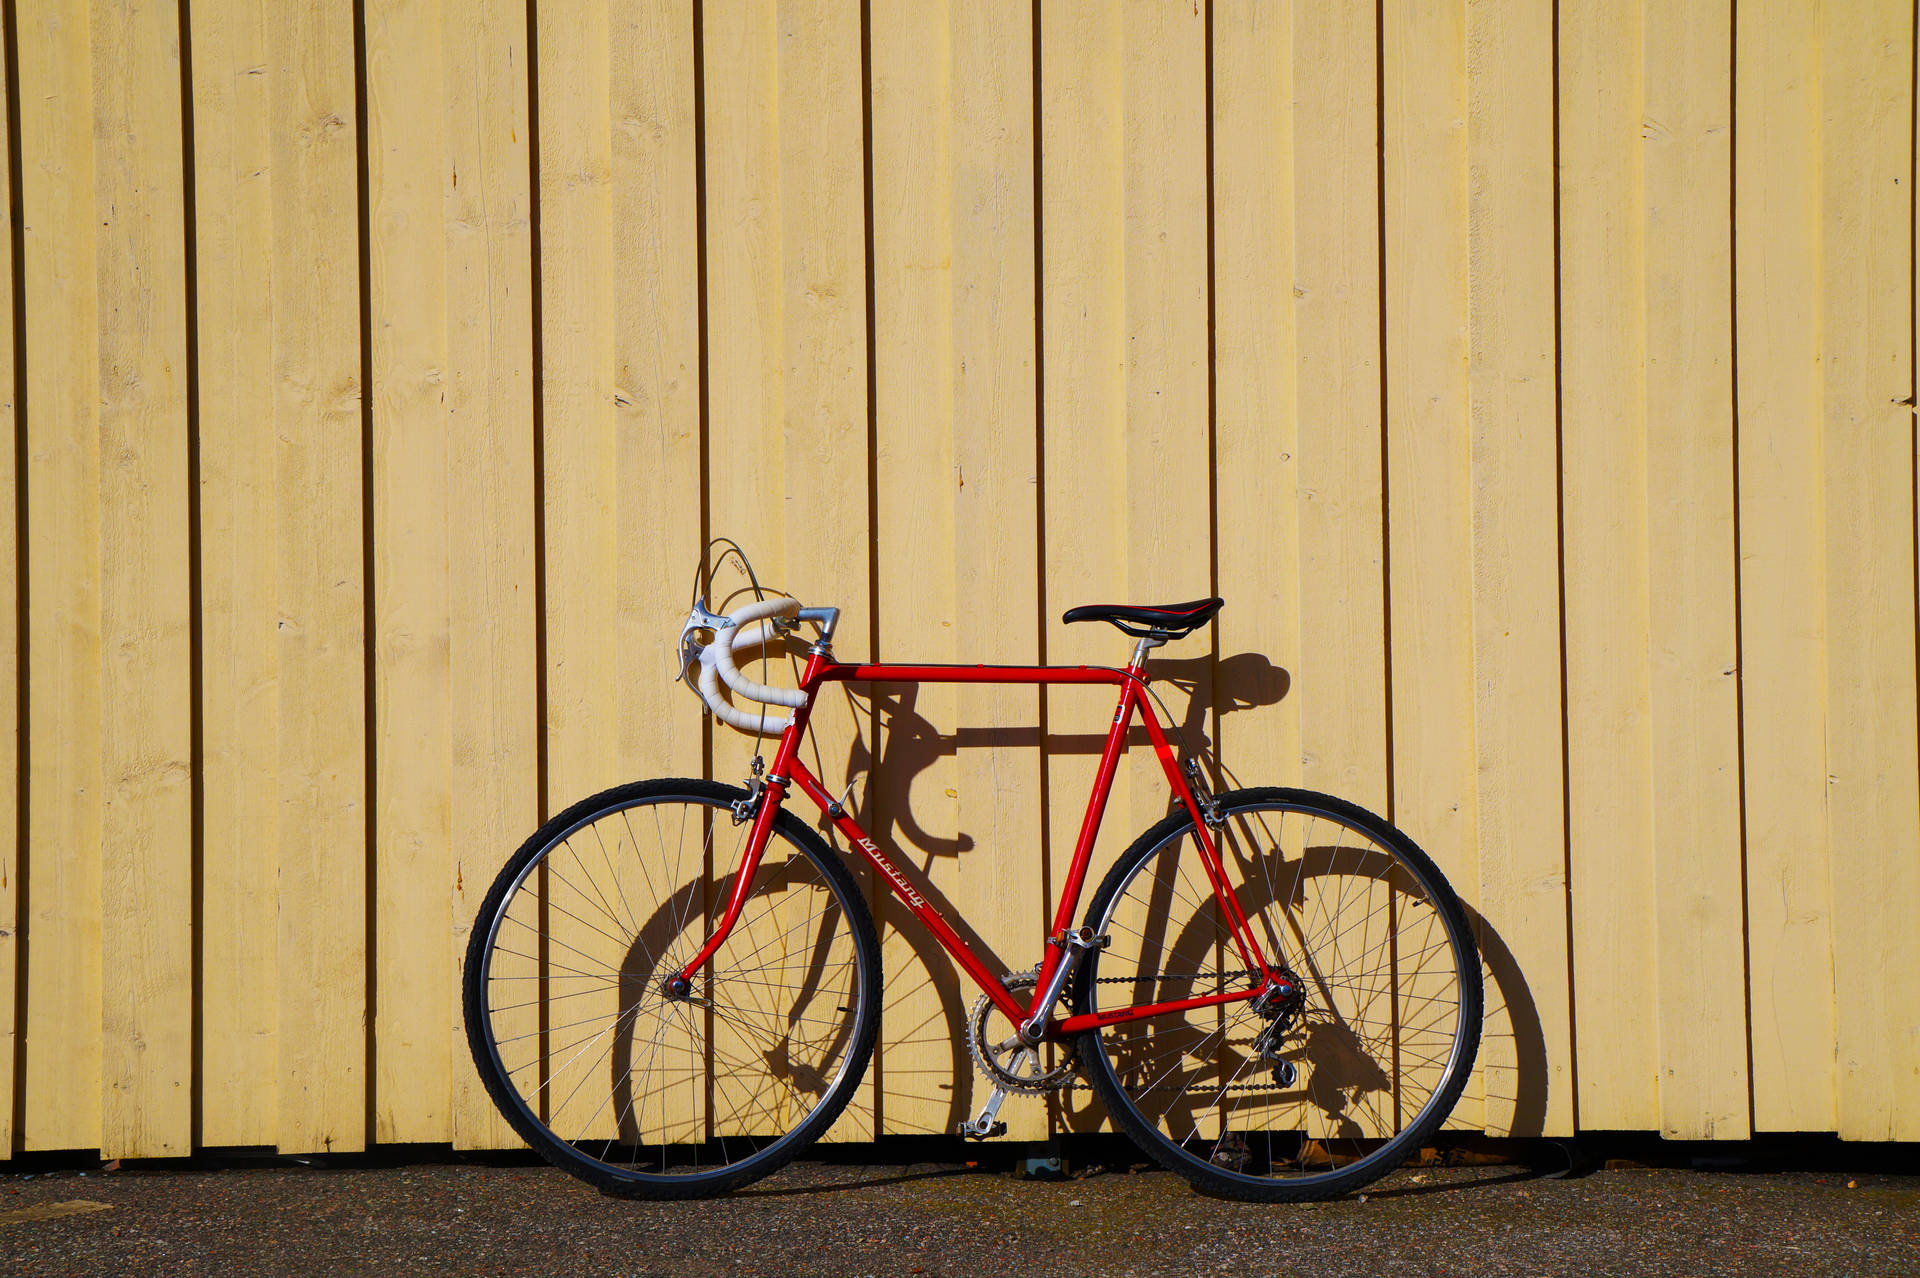 5456X3632 Bike Wallpaper and Background